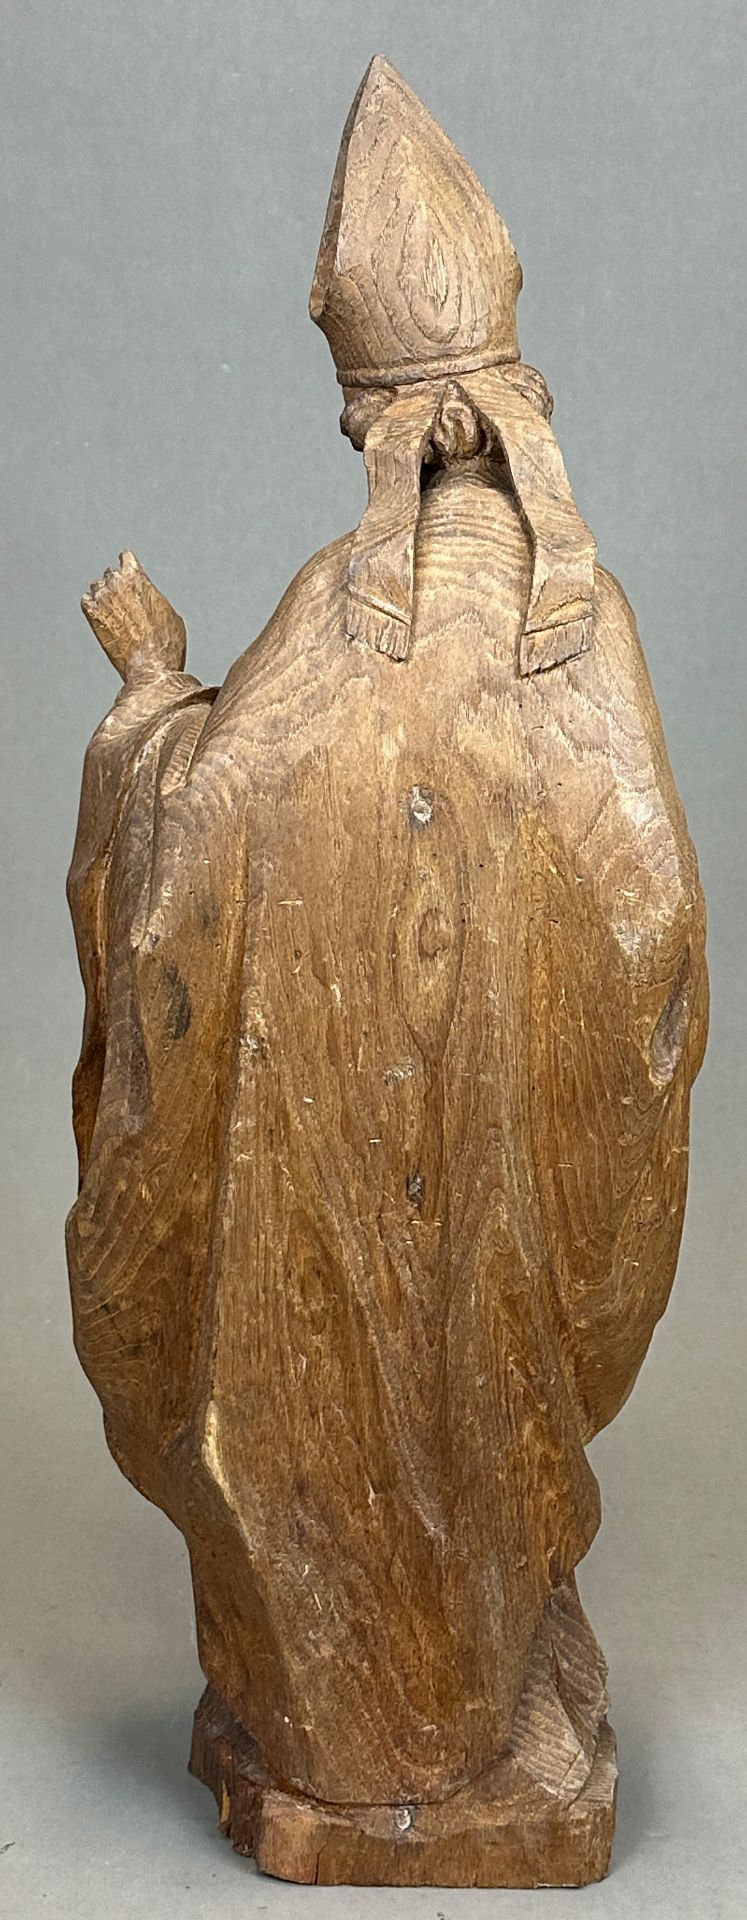 Florian SENONER (XX). Wooden figure. St Urban. Around 1900. Germany. - Image 3 of 9